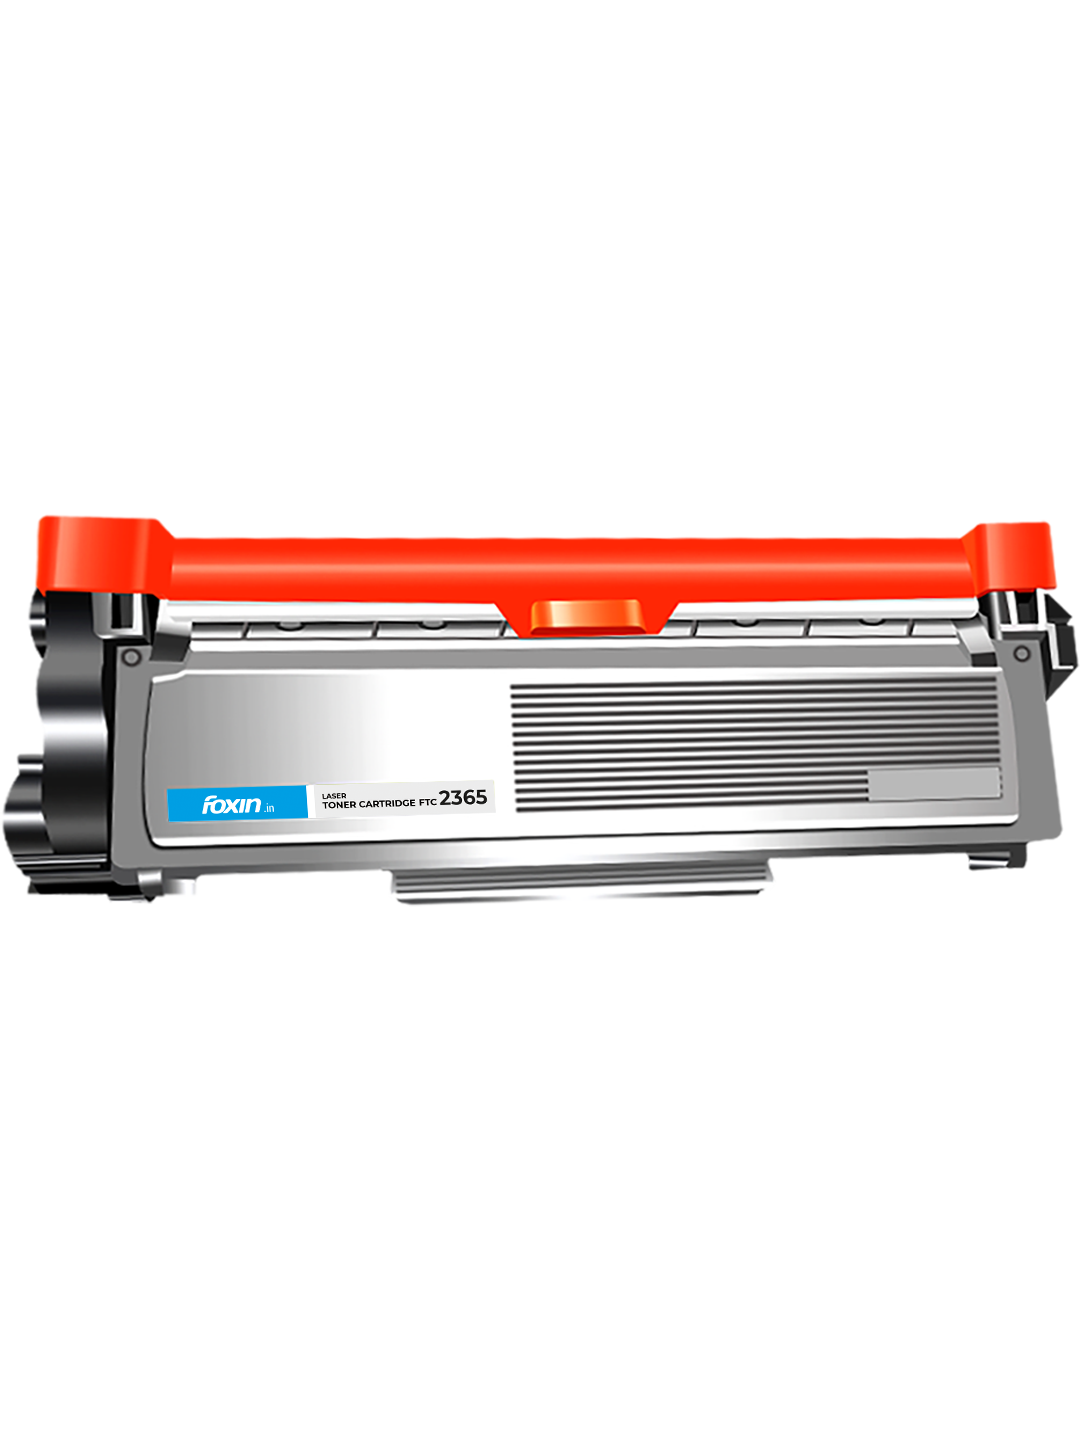 Toner Cartridge - Foxin | Black Laser Toner Printer Cartridge for HP Laser Jet Foxin Brand Store